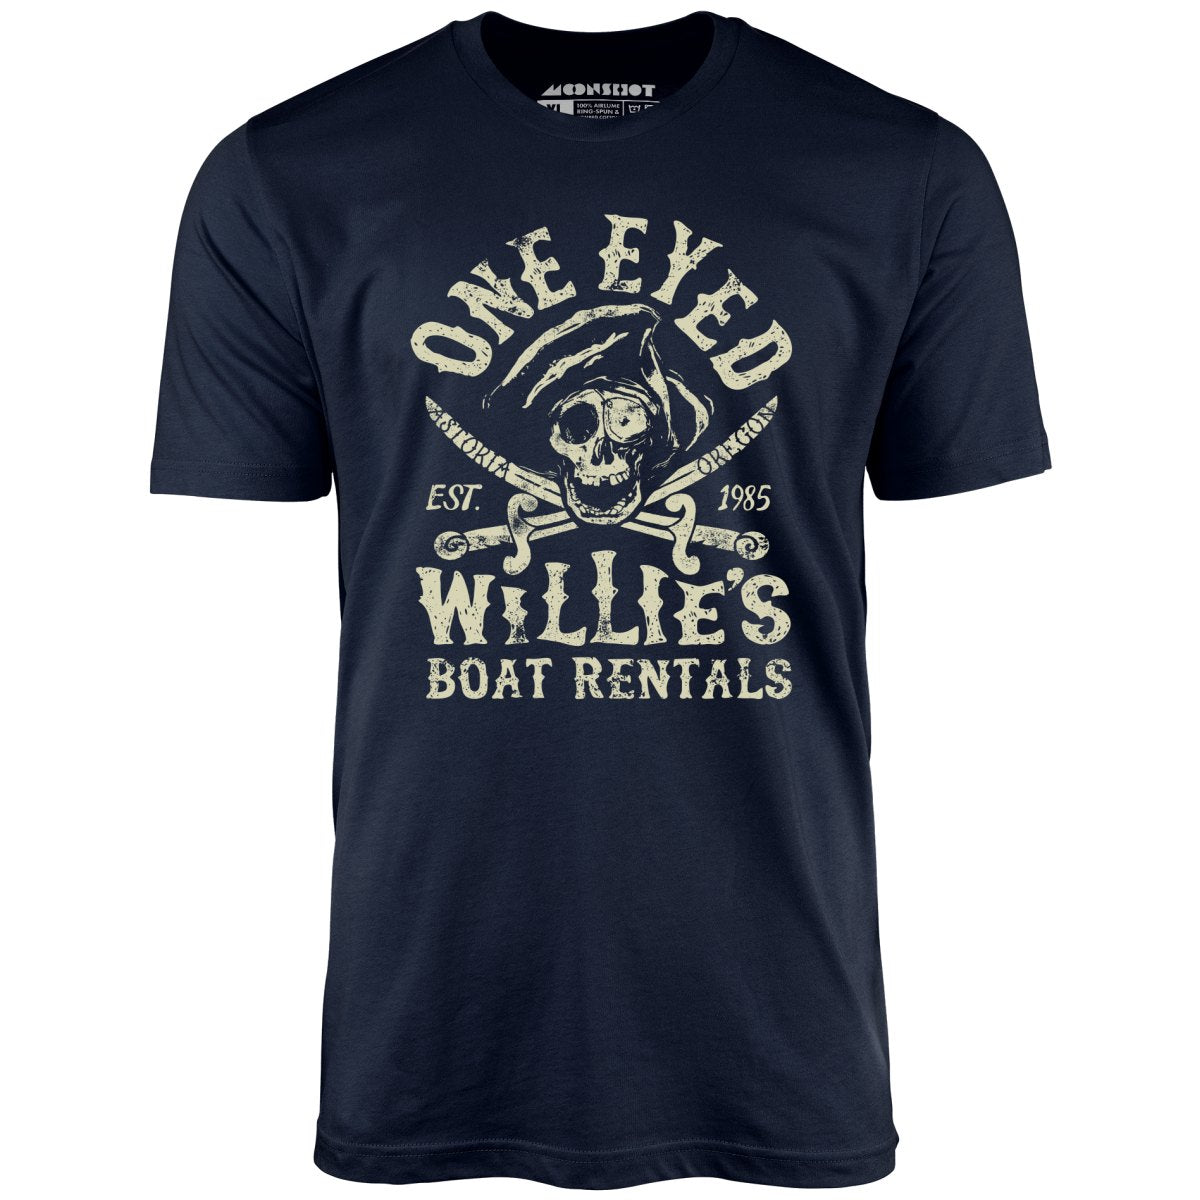 One Eyed Willie's Boat Rentals - Unisex T-Shirt